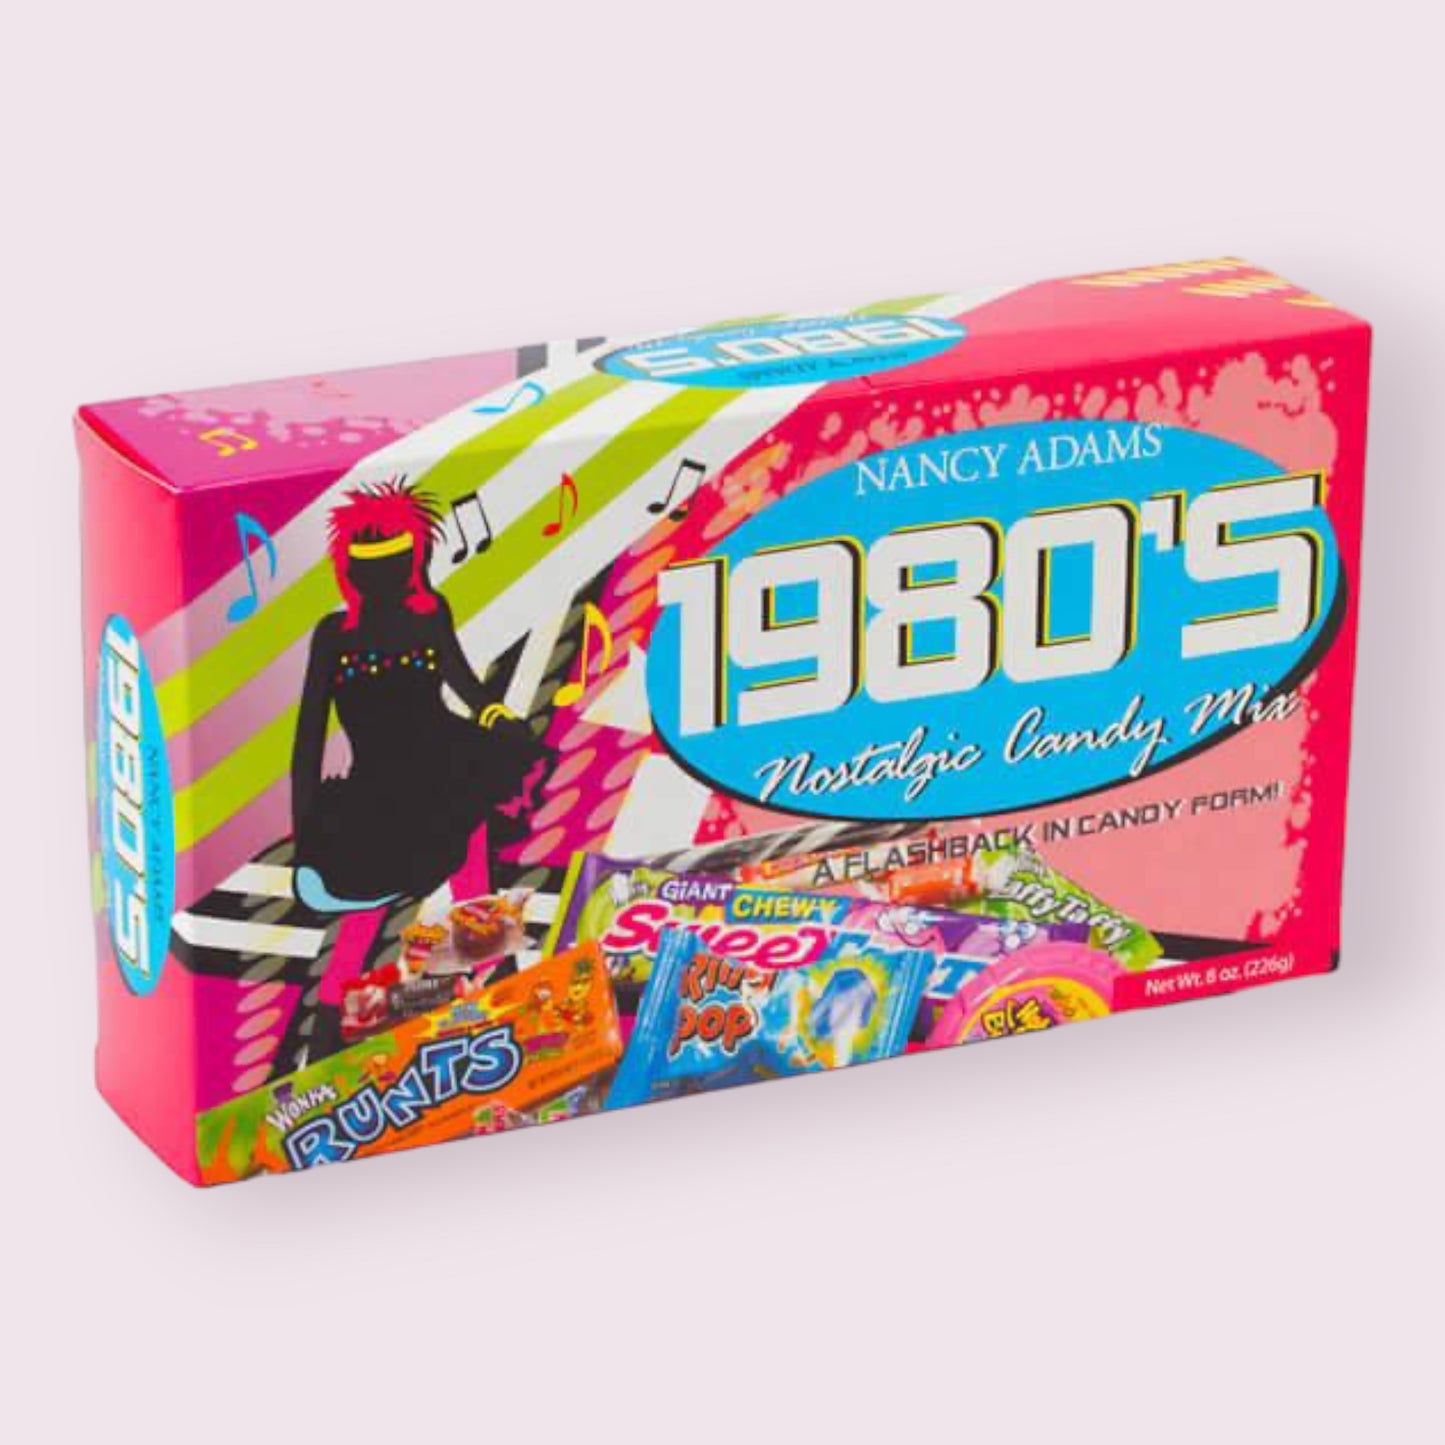 Nostalgic Candy Mix 1980’s  Pixie Candy Shoppe   